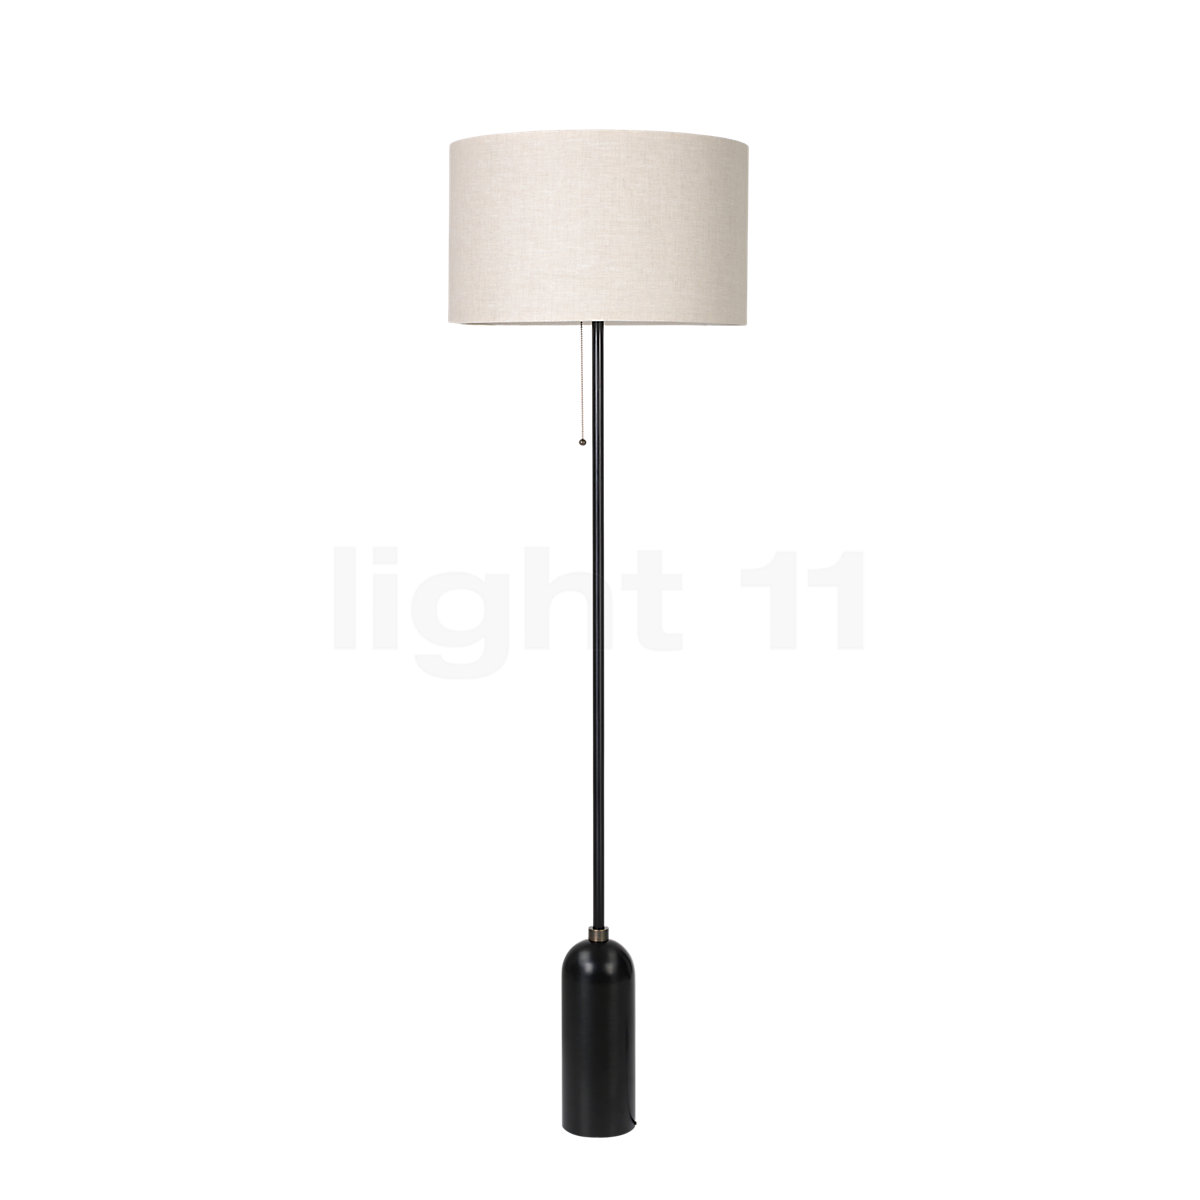 Gubi Gravity Floor Lamp At Light11 Eu, Black And White Table Lamp Shades